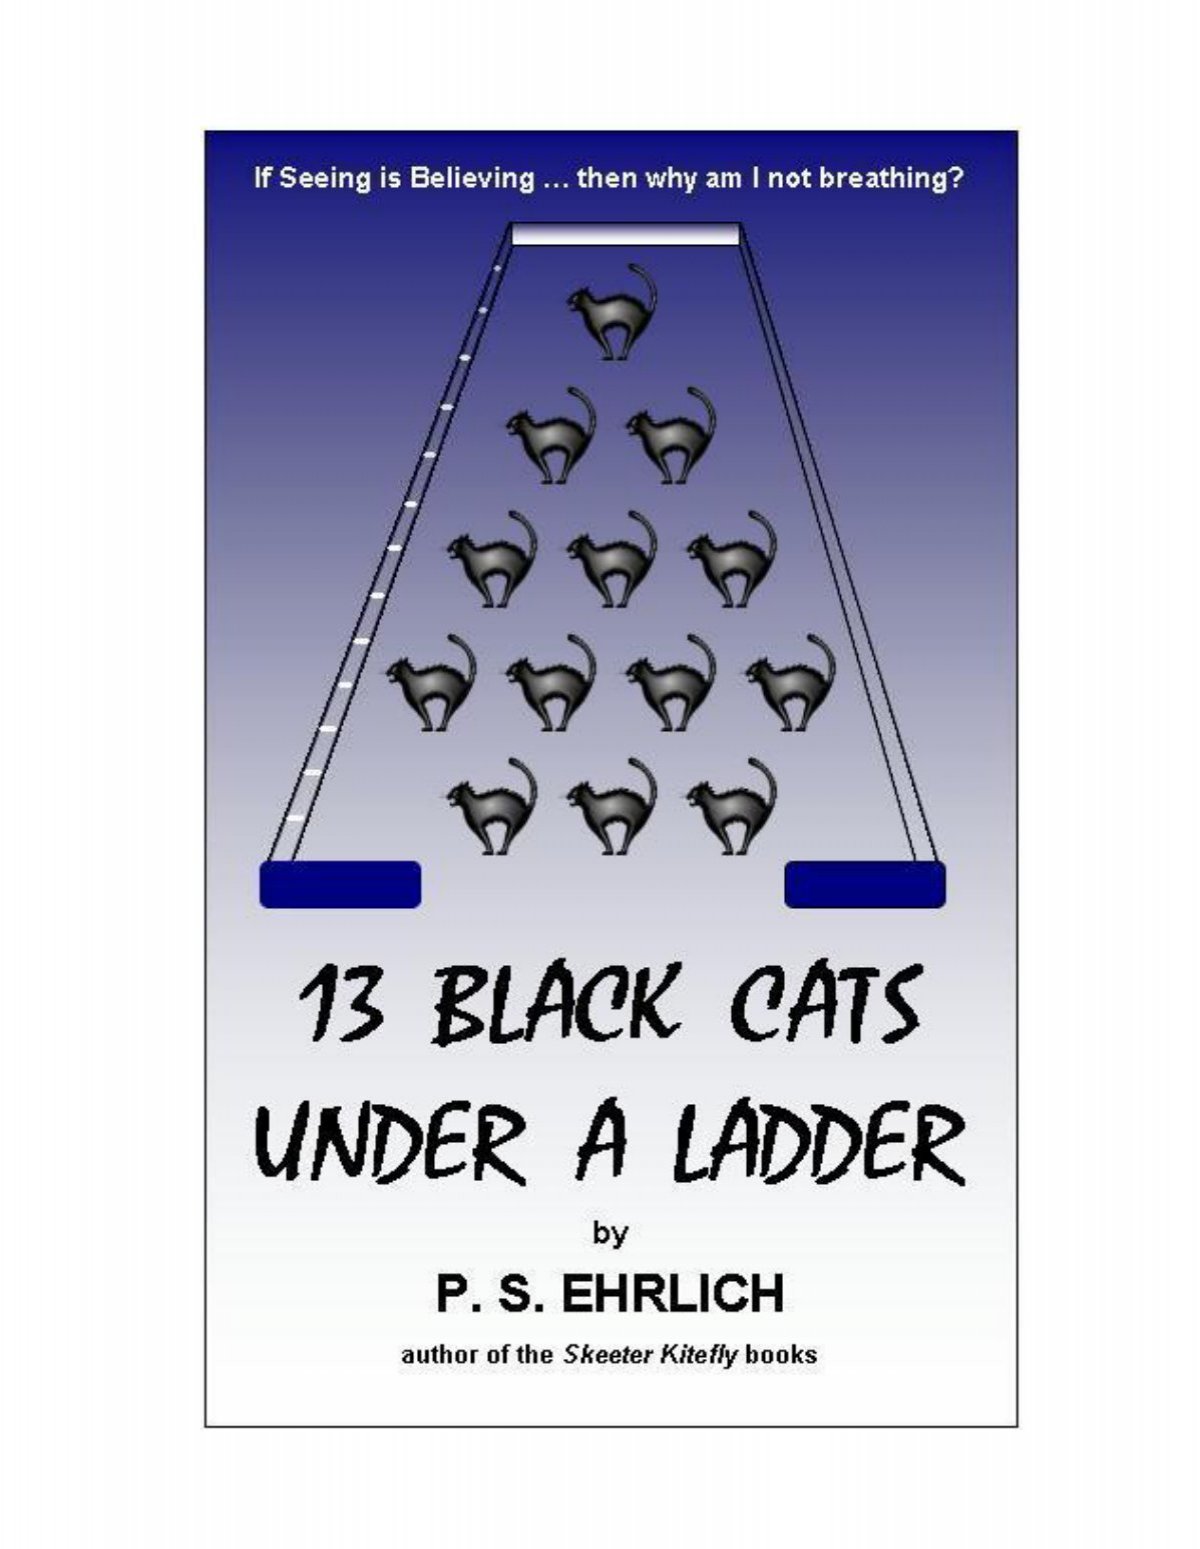 13 BLACK CATS UNDER A LADDER - Skeeter Kitefly Website's